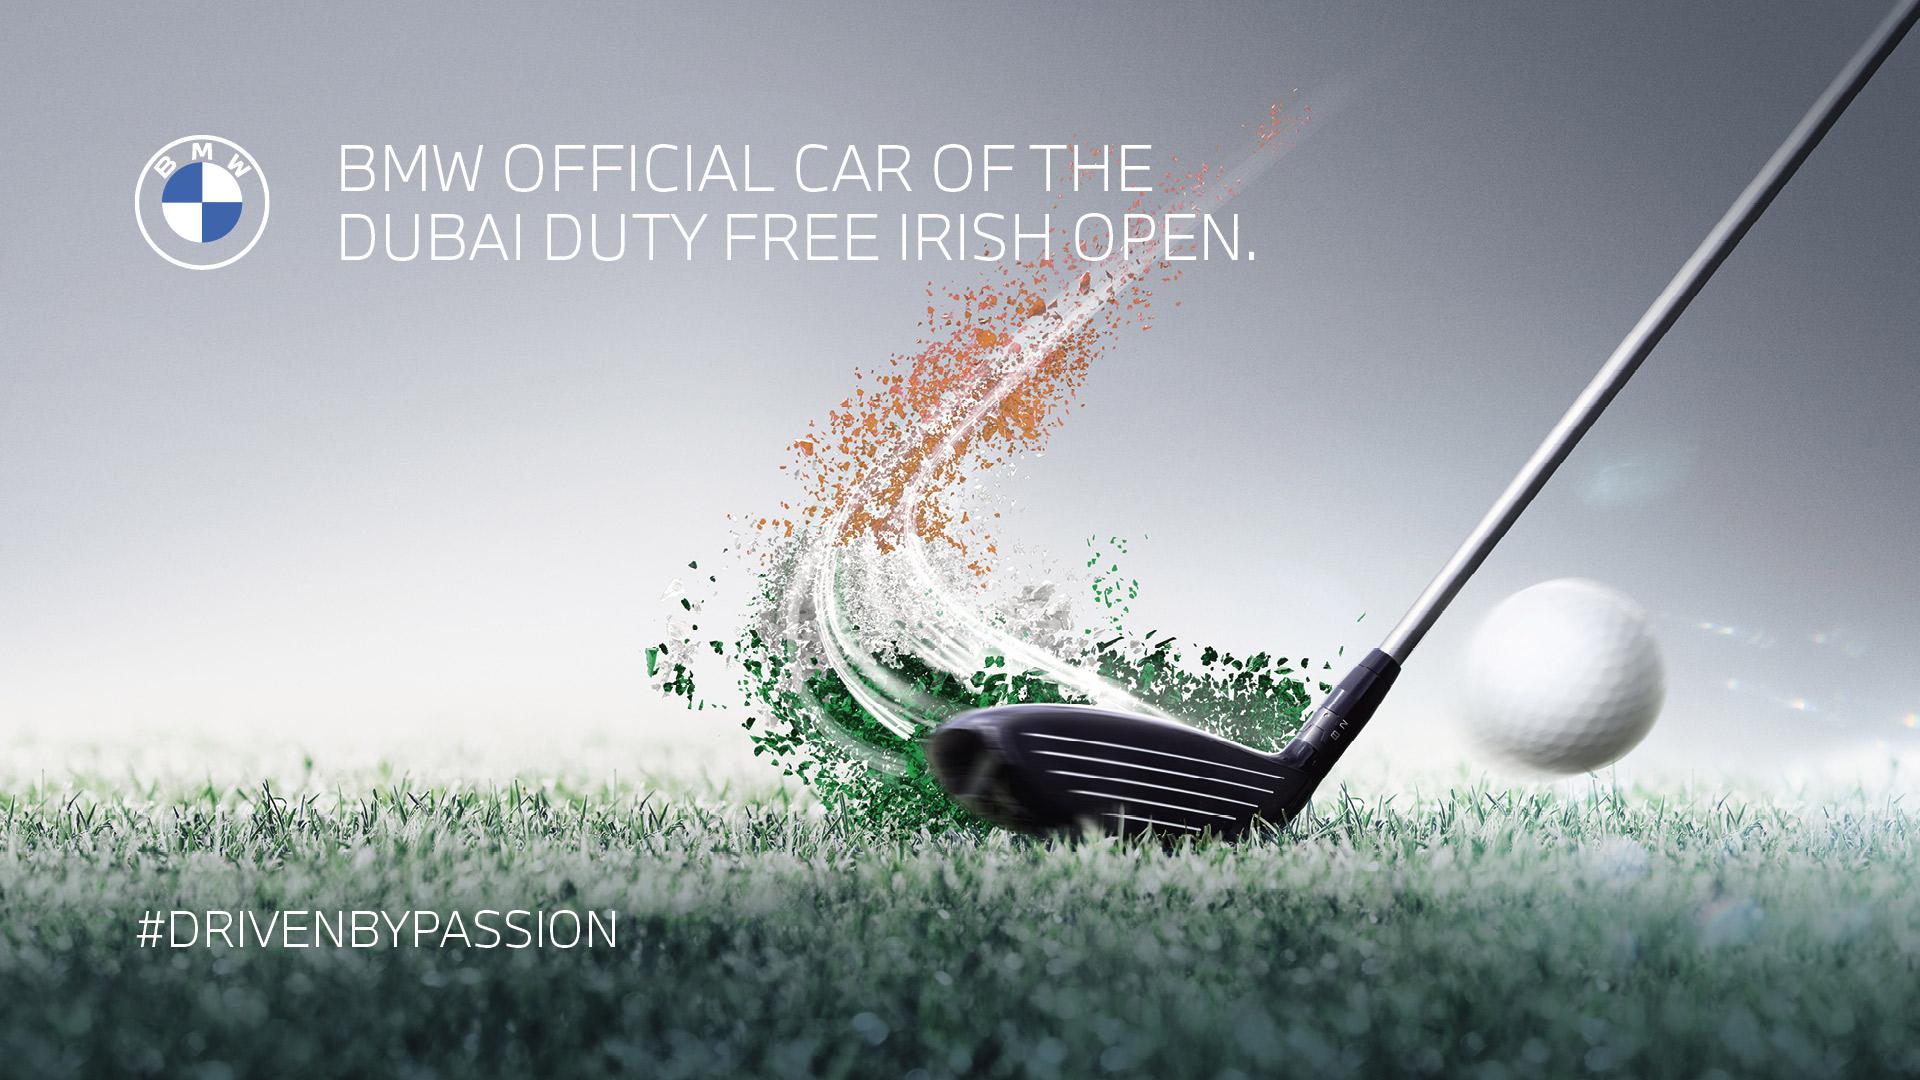 Next To Be Postponed .. Dubai Duty Free Irish Open At Mt. Juliet?